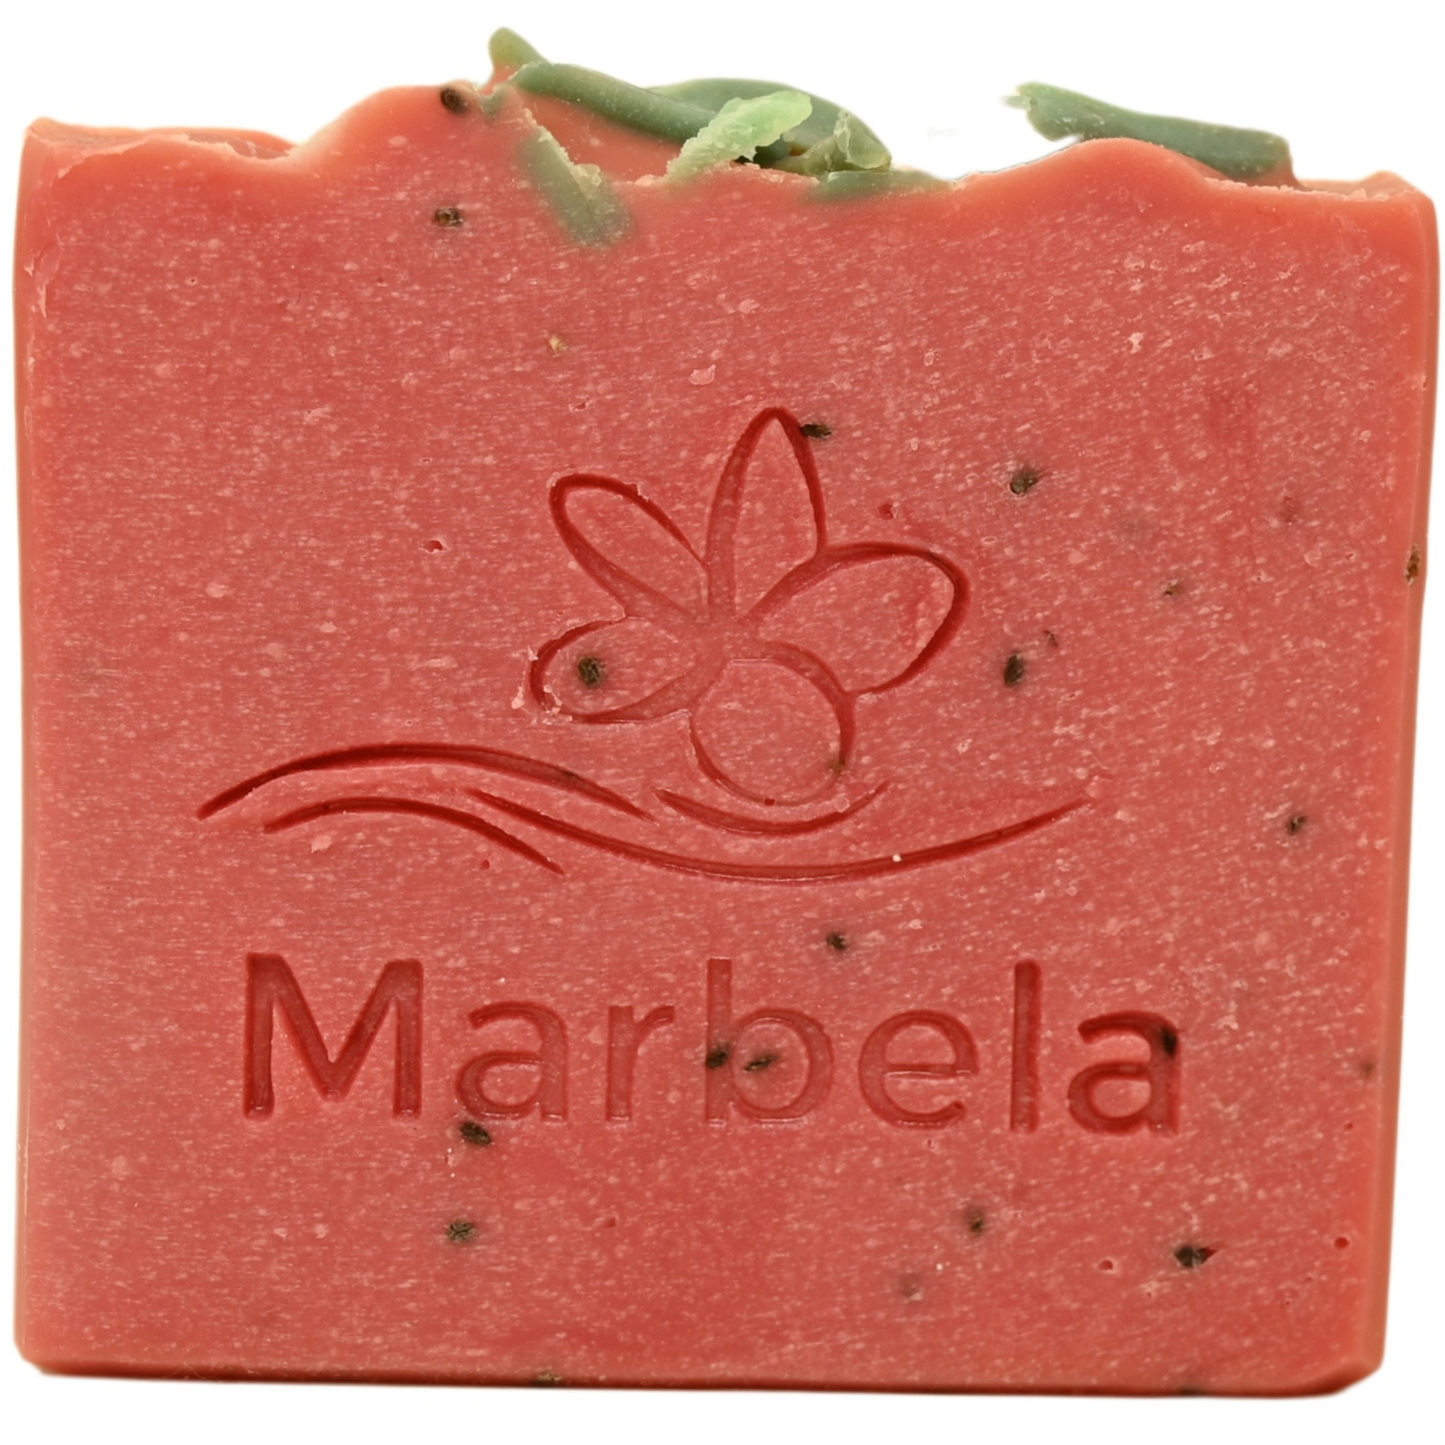 Berrylicious Soap